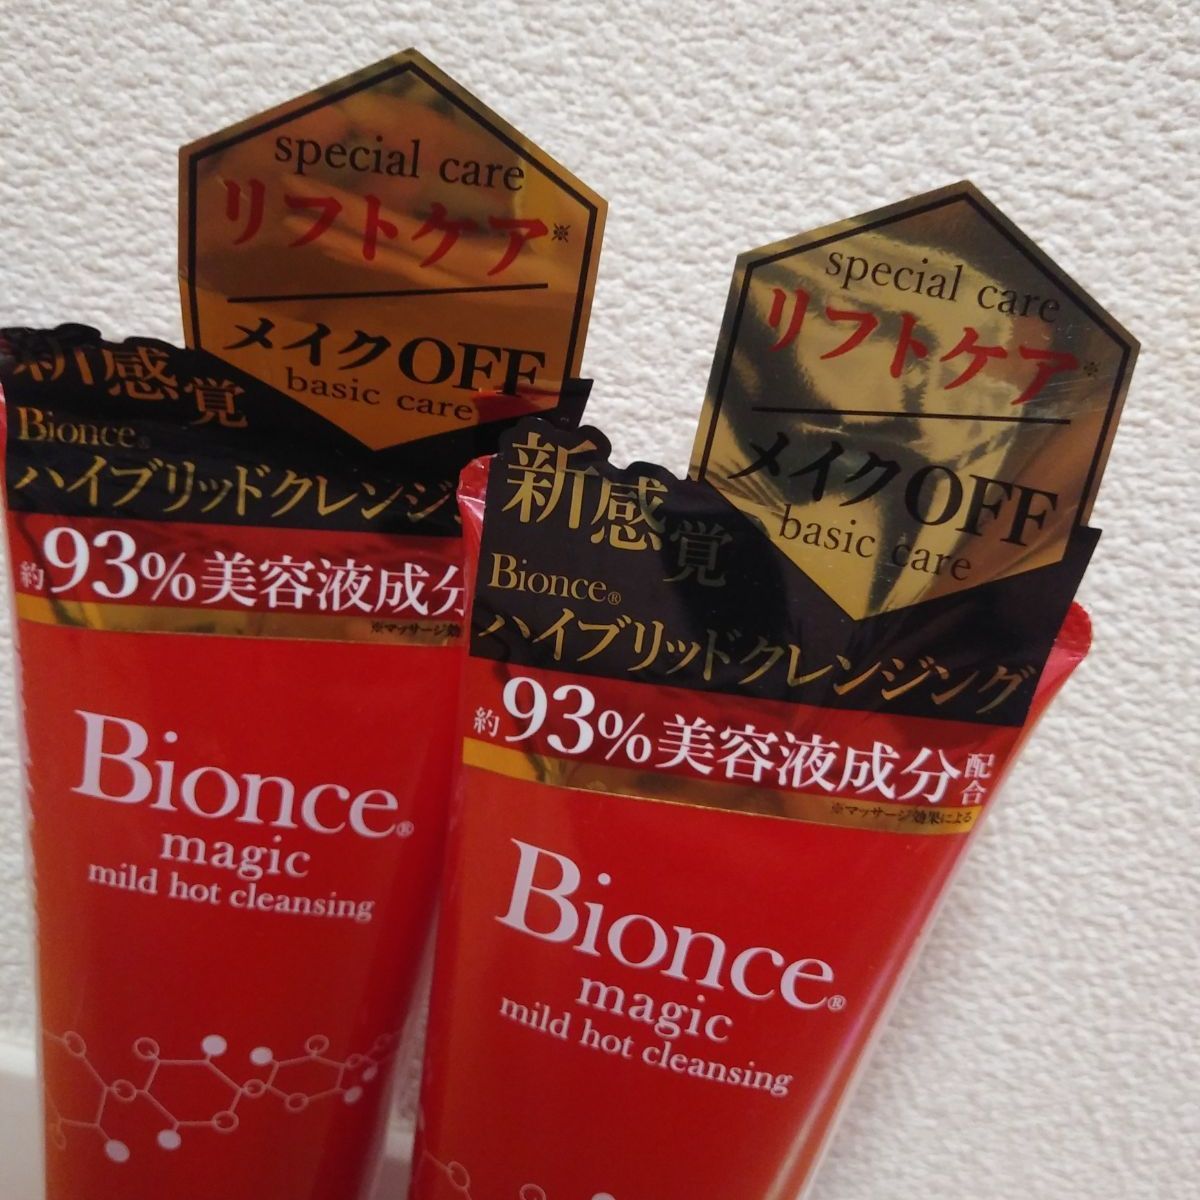 BIONCE】bionce ビオンセ マイルド ホットクレンジング 2本セット 蘭's shop•*¨*•.¸¸✧ メルカリ